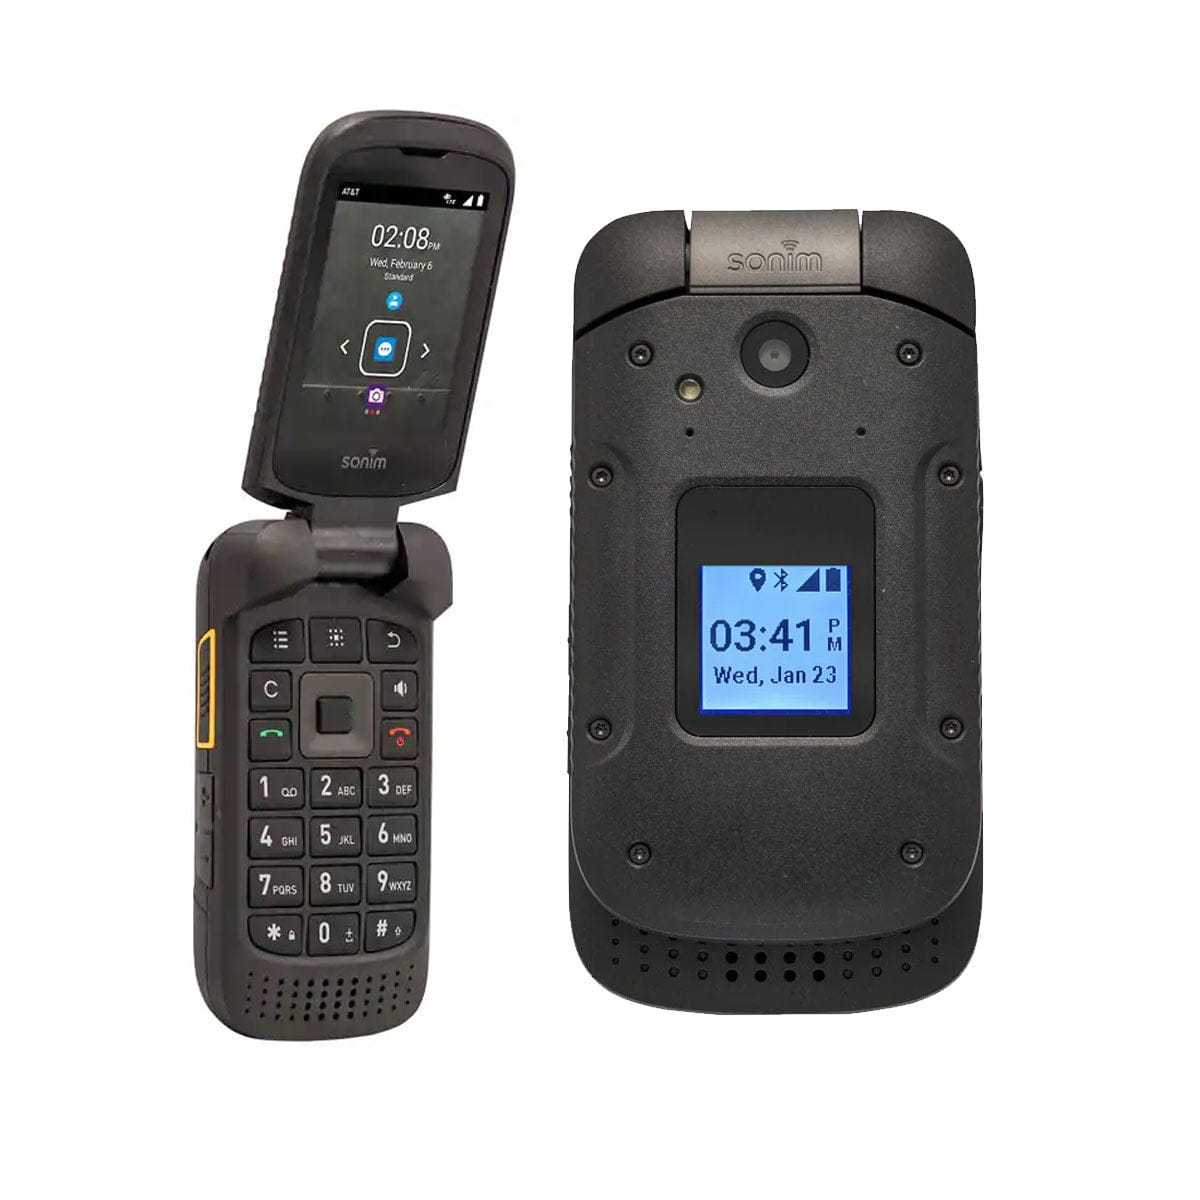 Sonim XP3 Xp3800 Verizon Unlocked 4G LTE Flip Cell-Phone with Camera